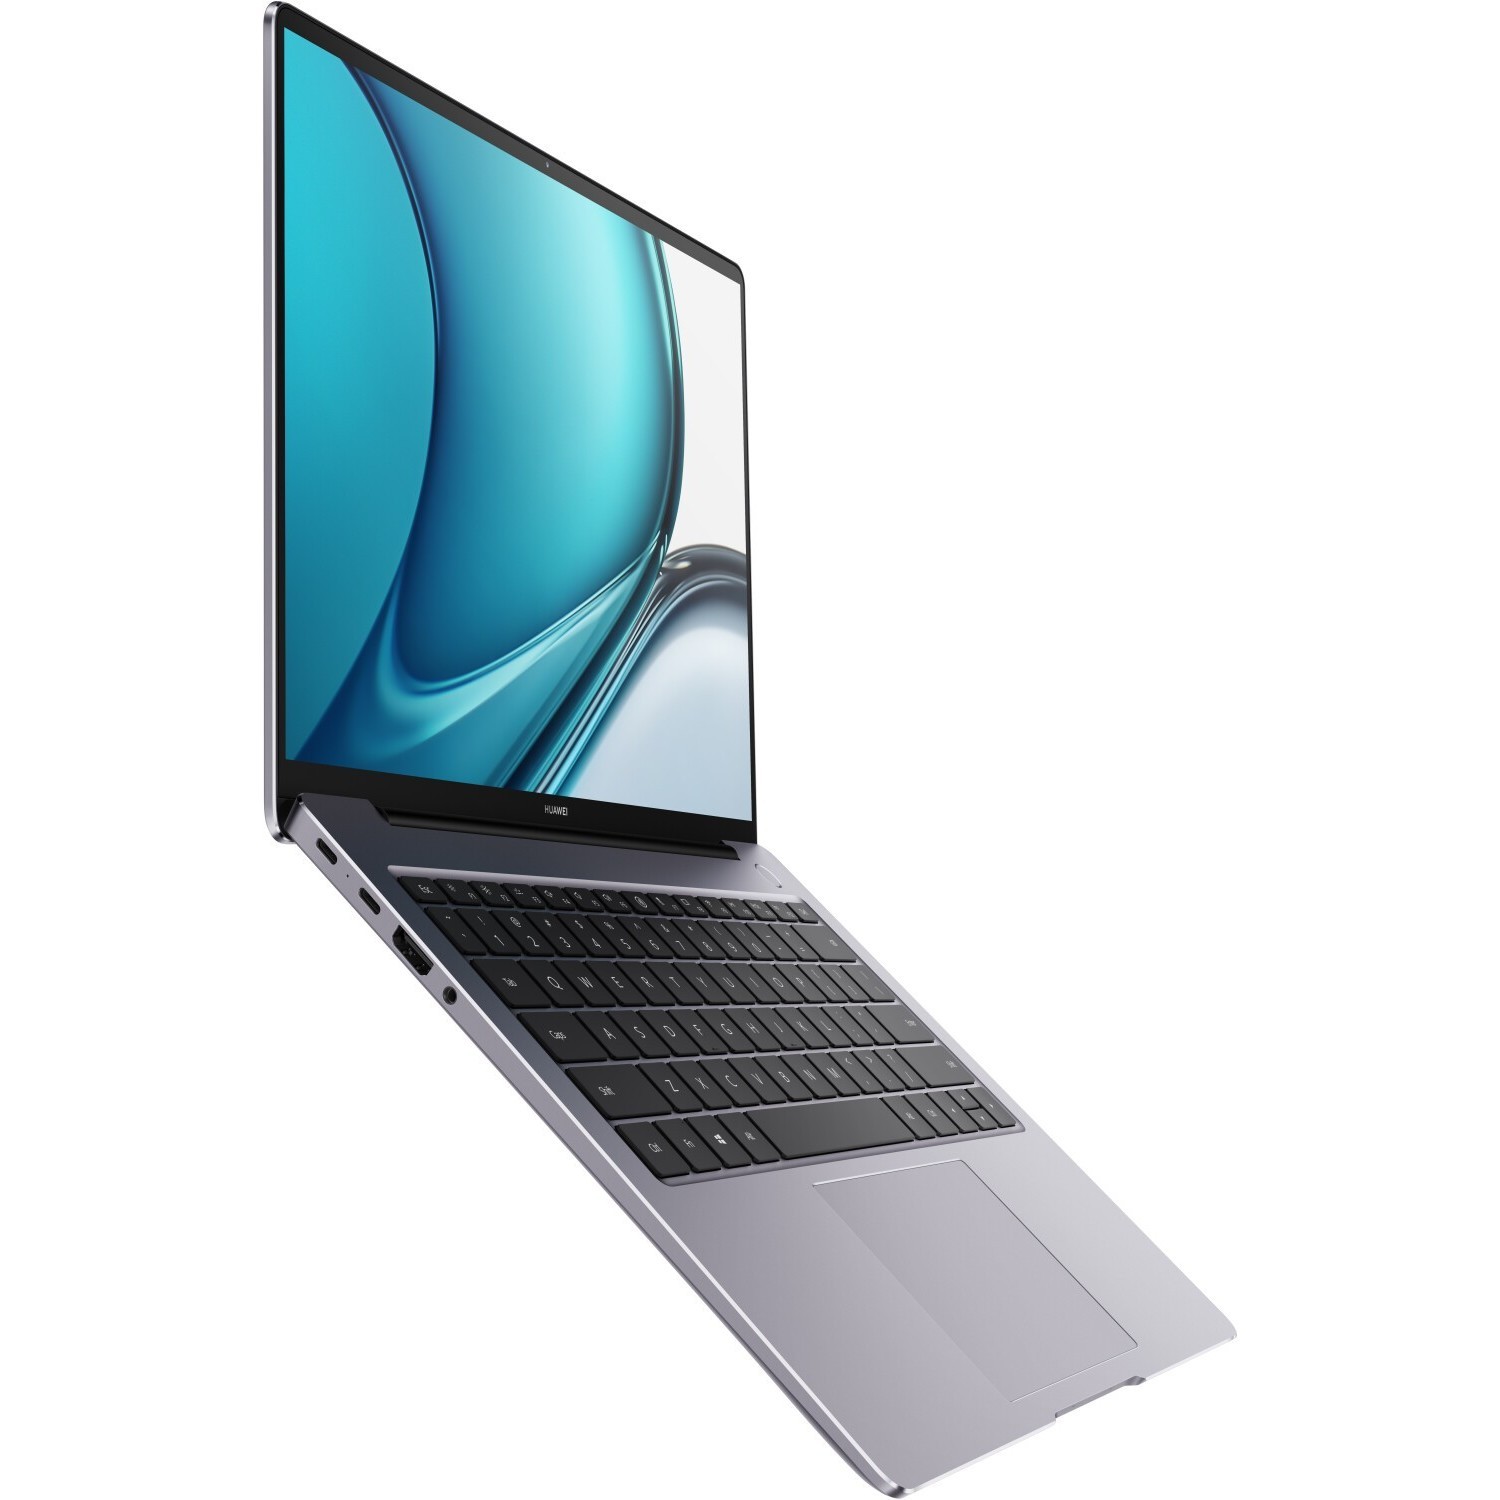 Ноутбуки Huawei HookeD-W5851T